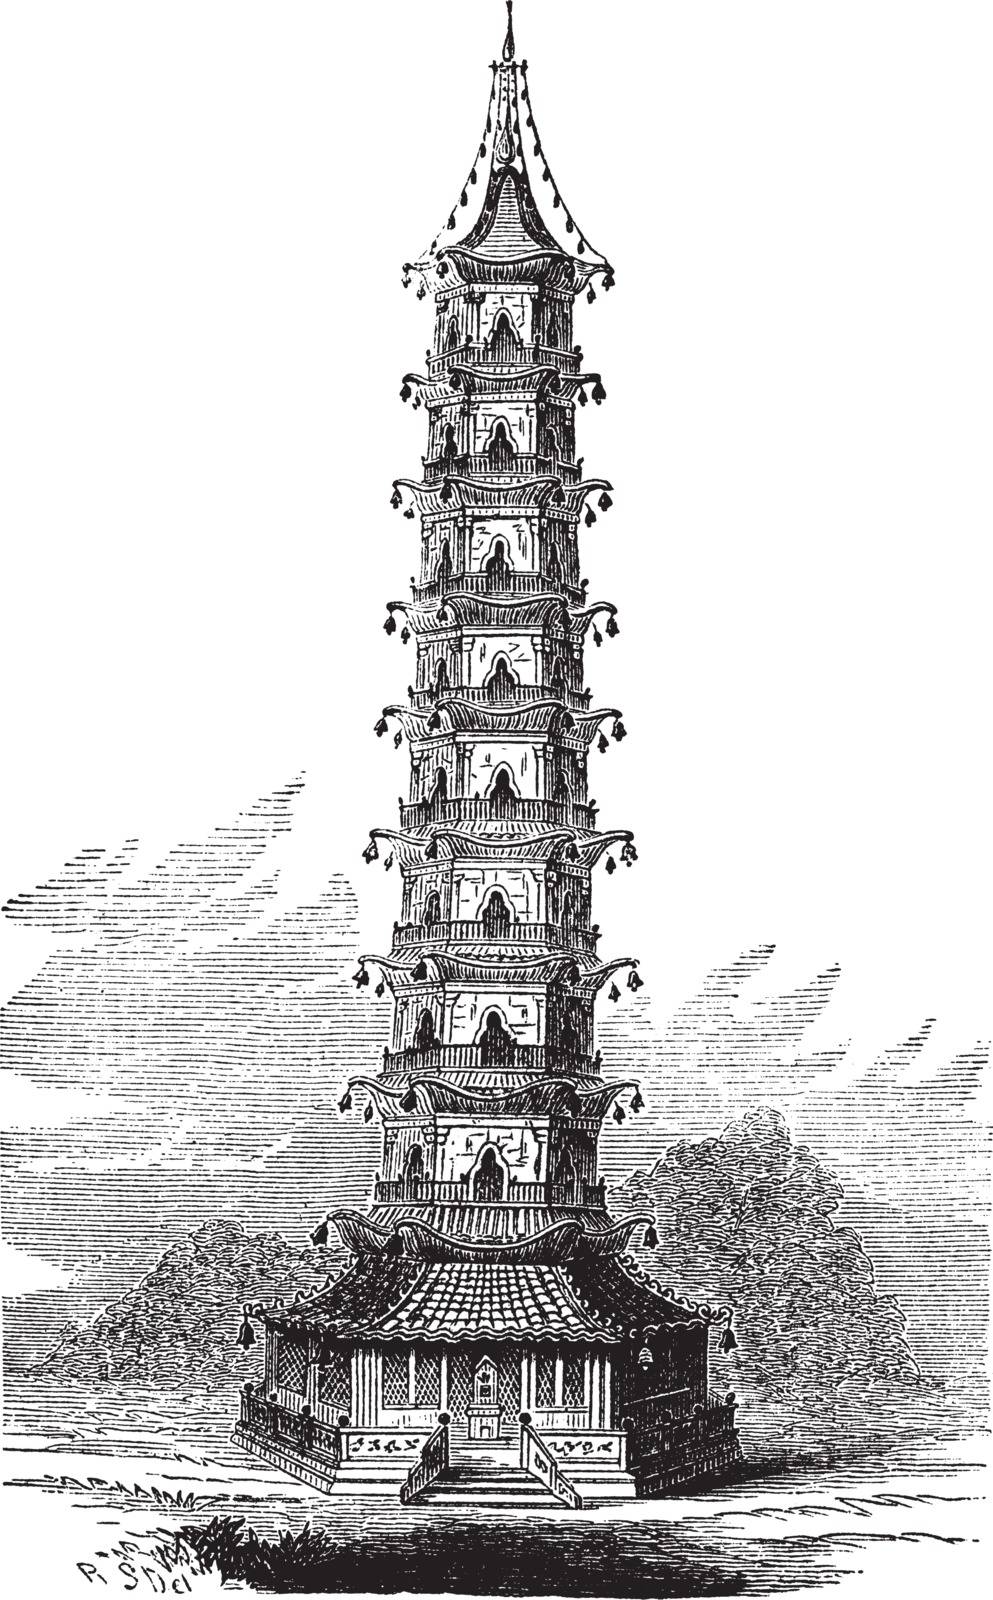 Porcelain Tower of Nanjing, in China, vintage engraved illustrat by Morphart